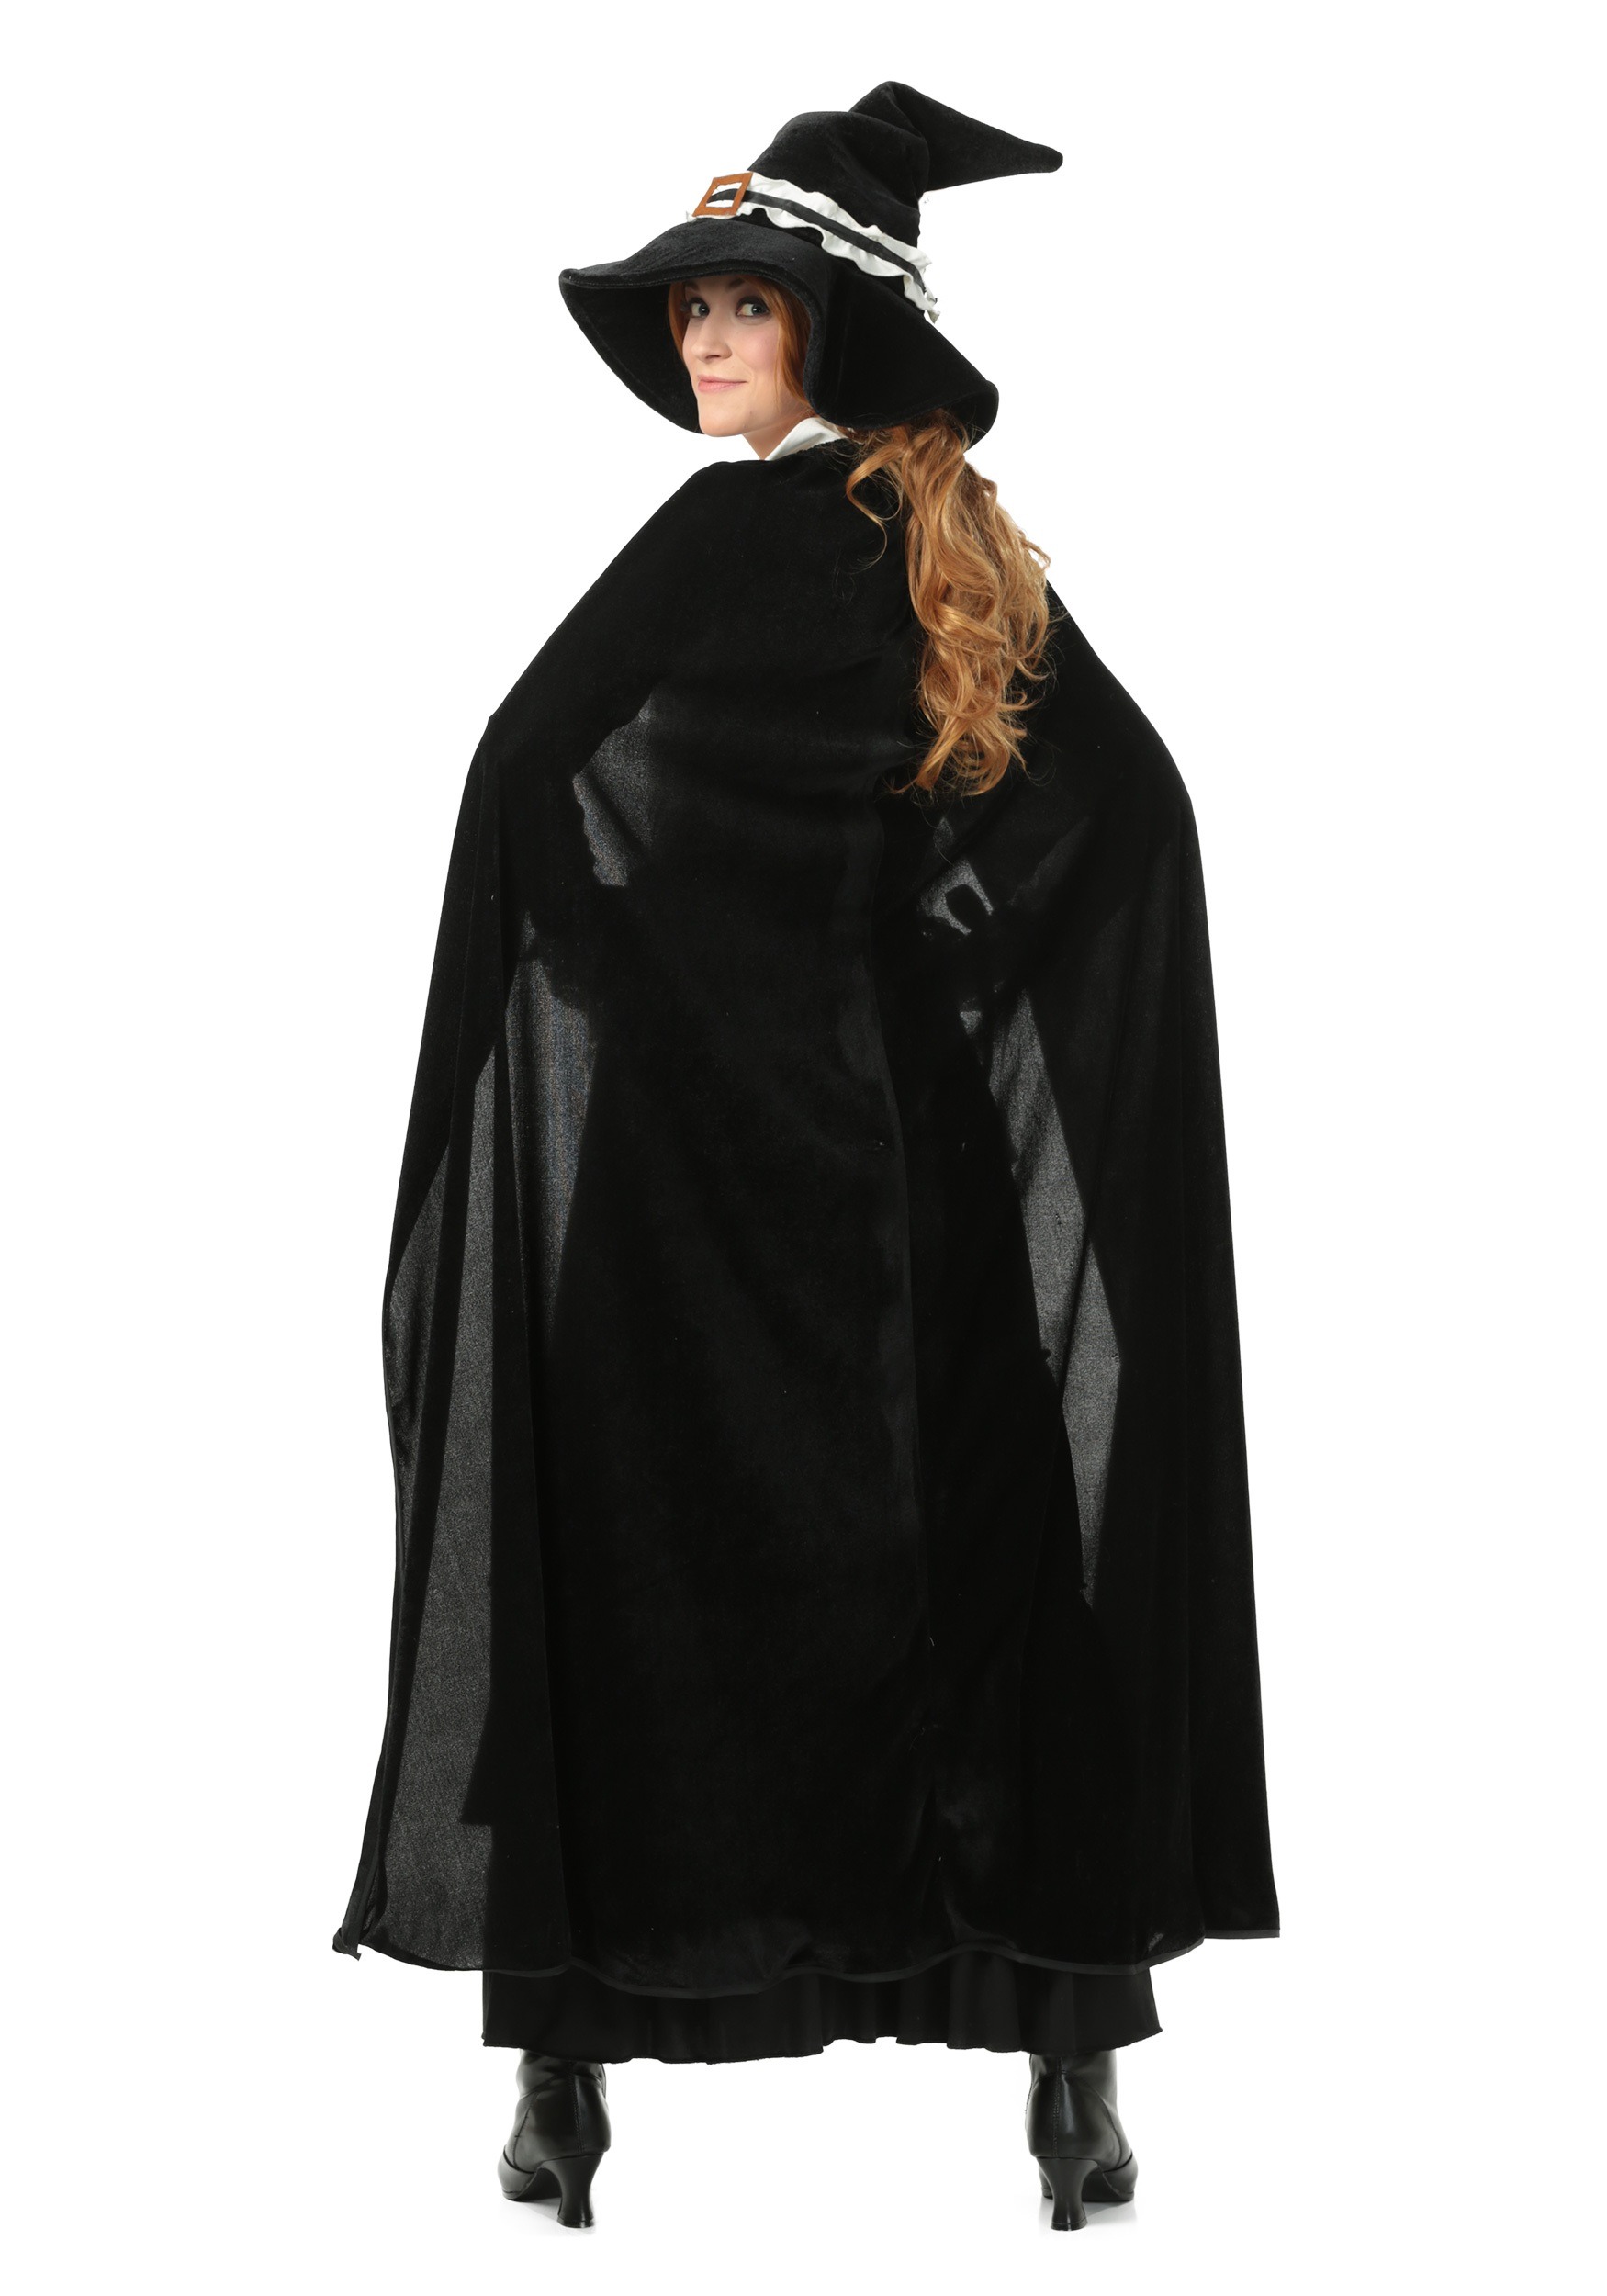 Salem Witch Plus Size Fancy Dress Costume For Women